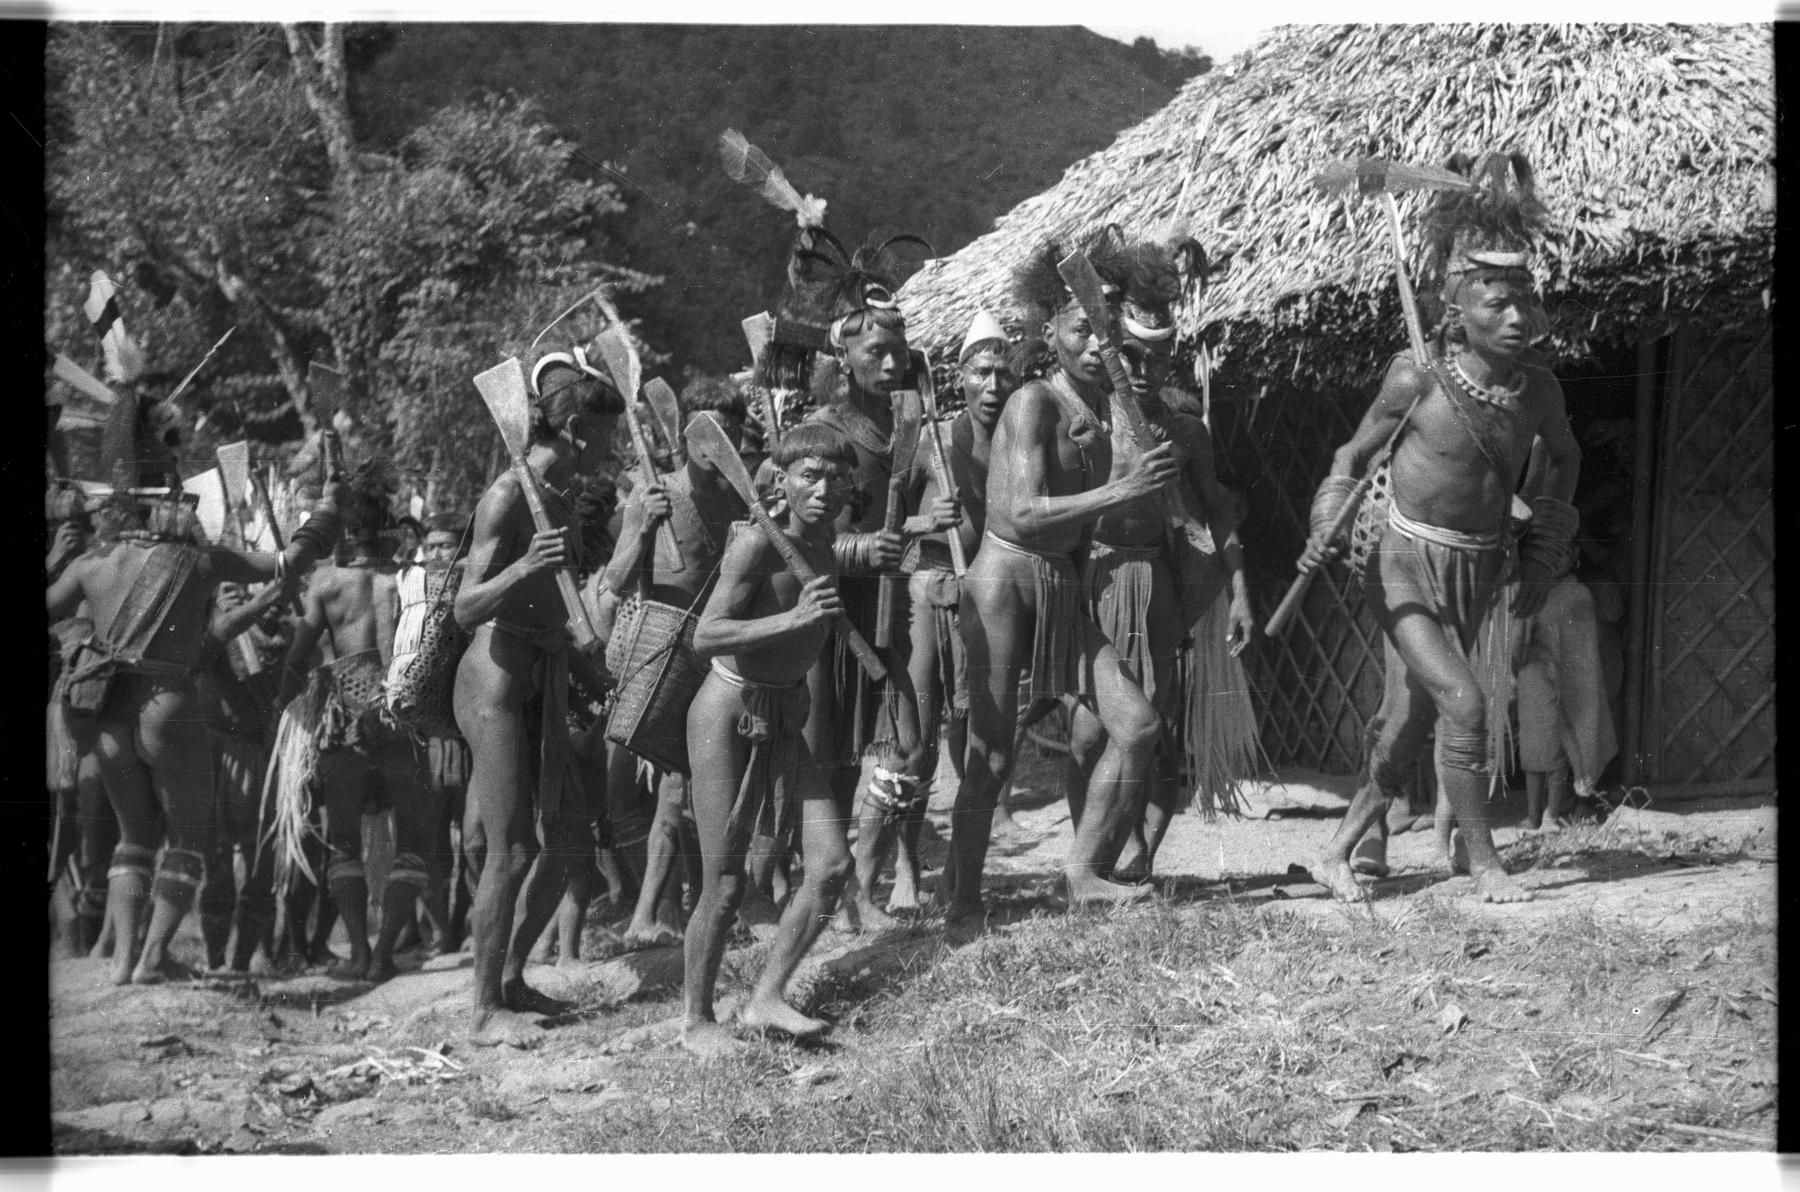 Naga Head-hunters' dance, North East India, 1936. | NAGA | Pinterest ...